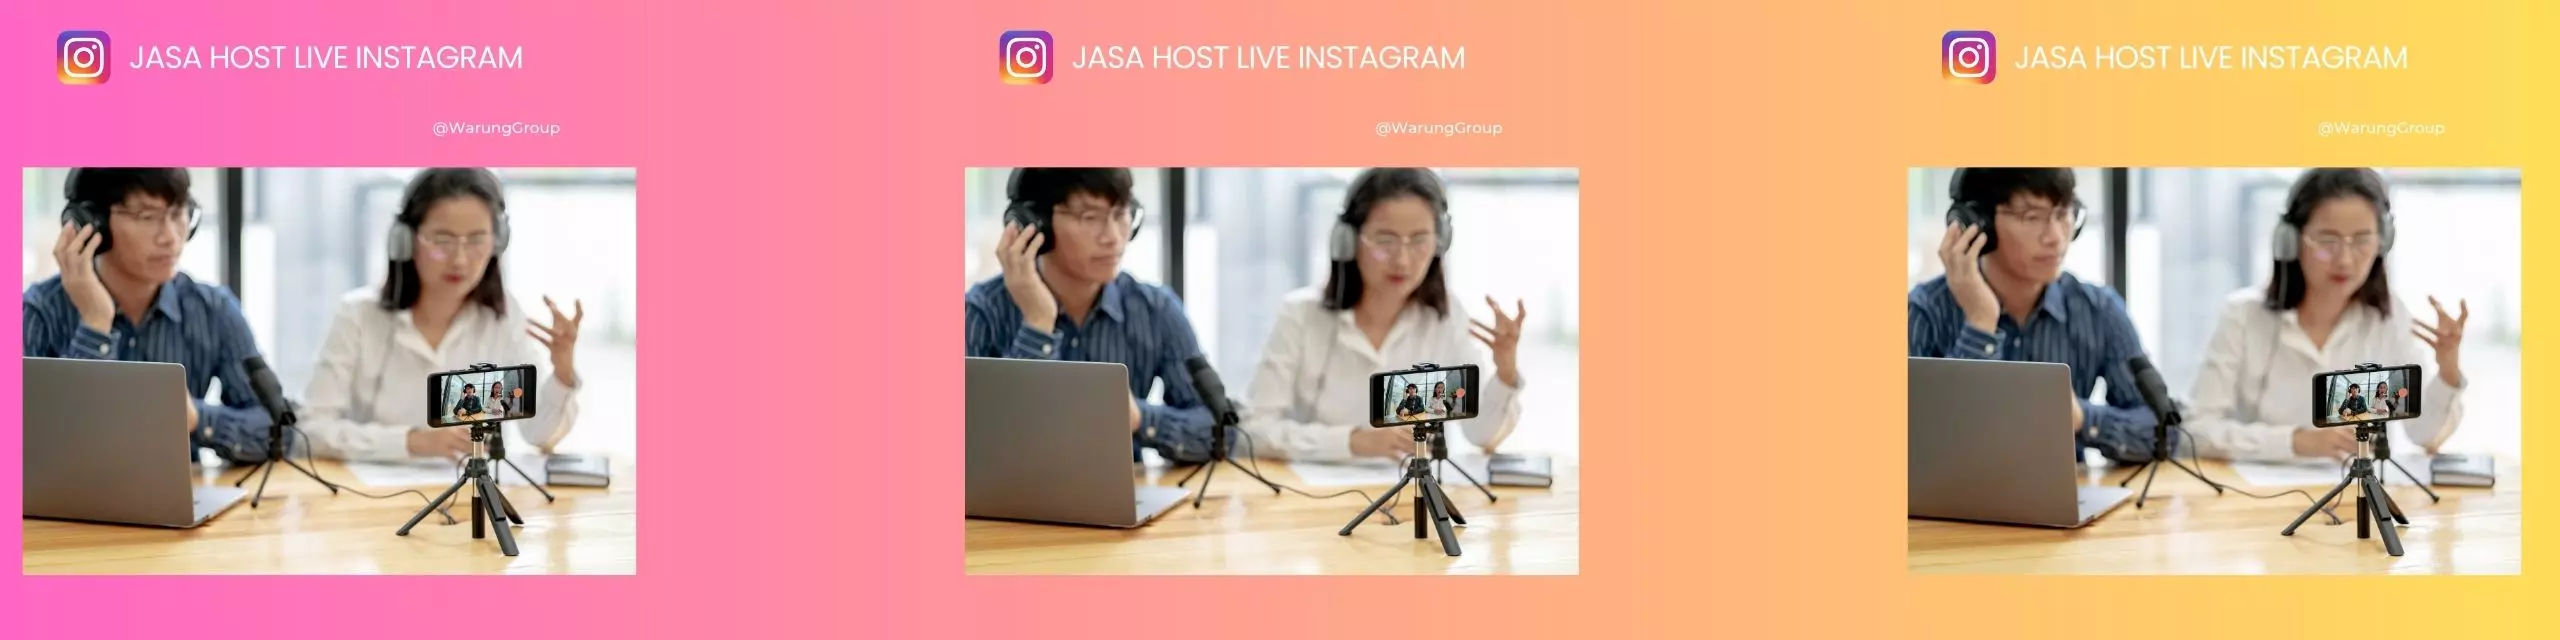 Jasa Host Live Instagram